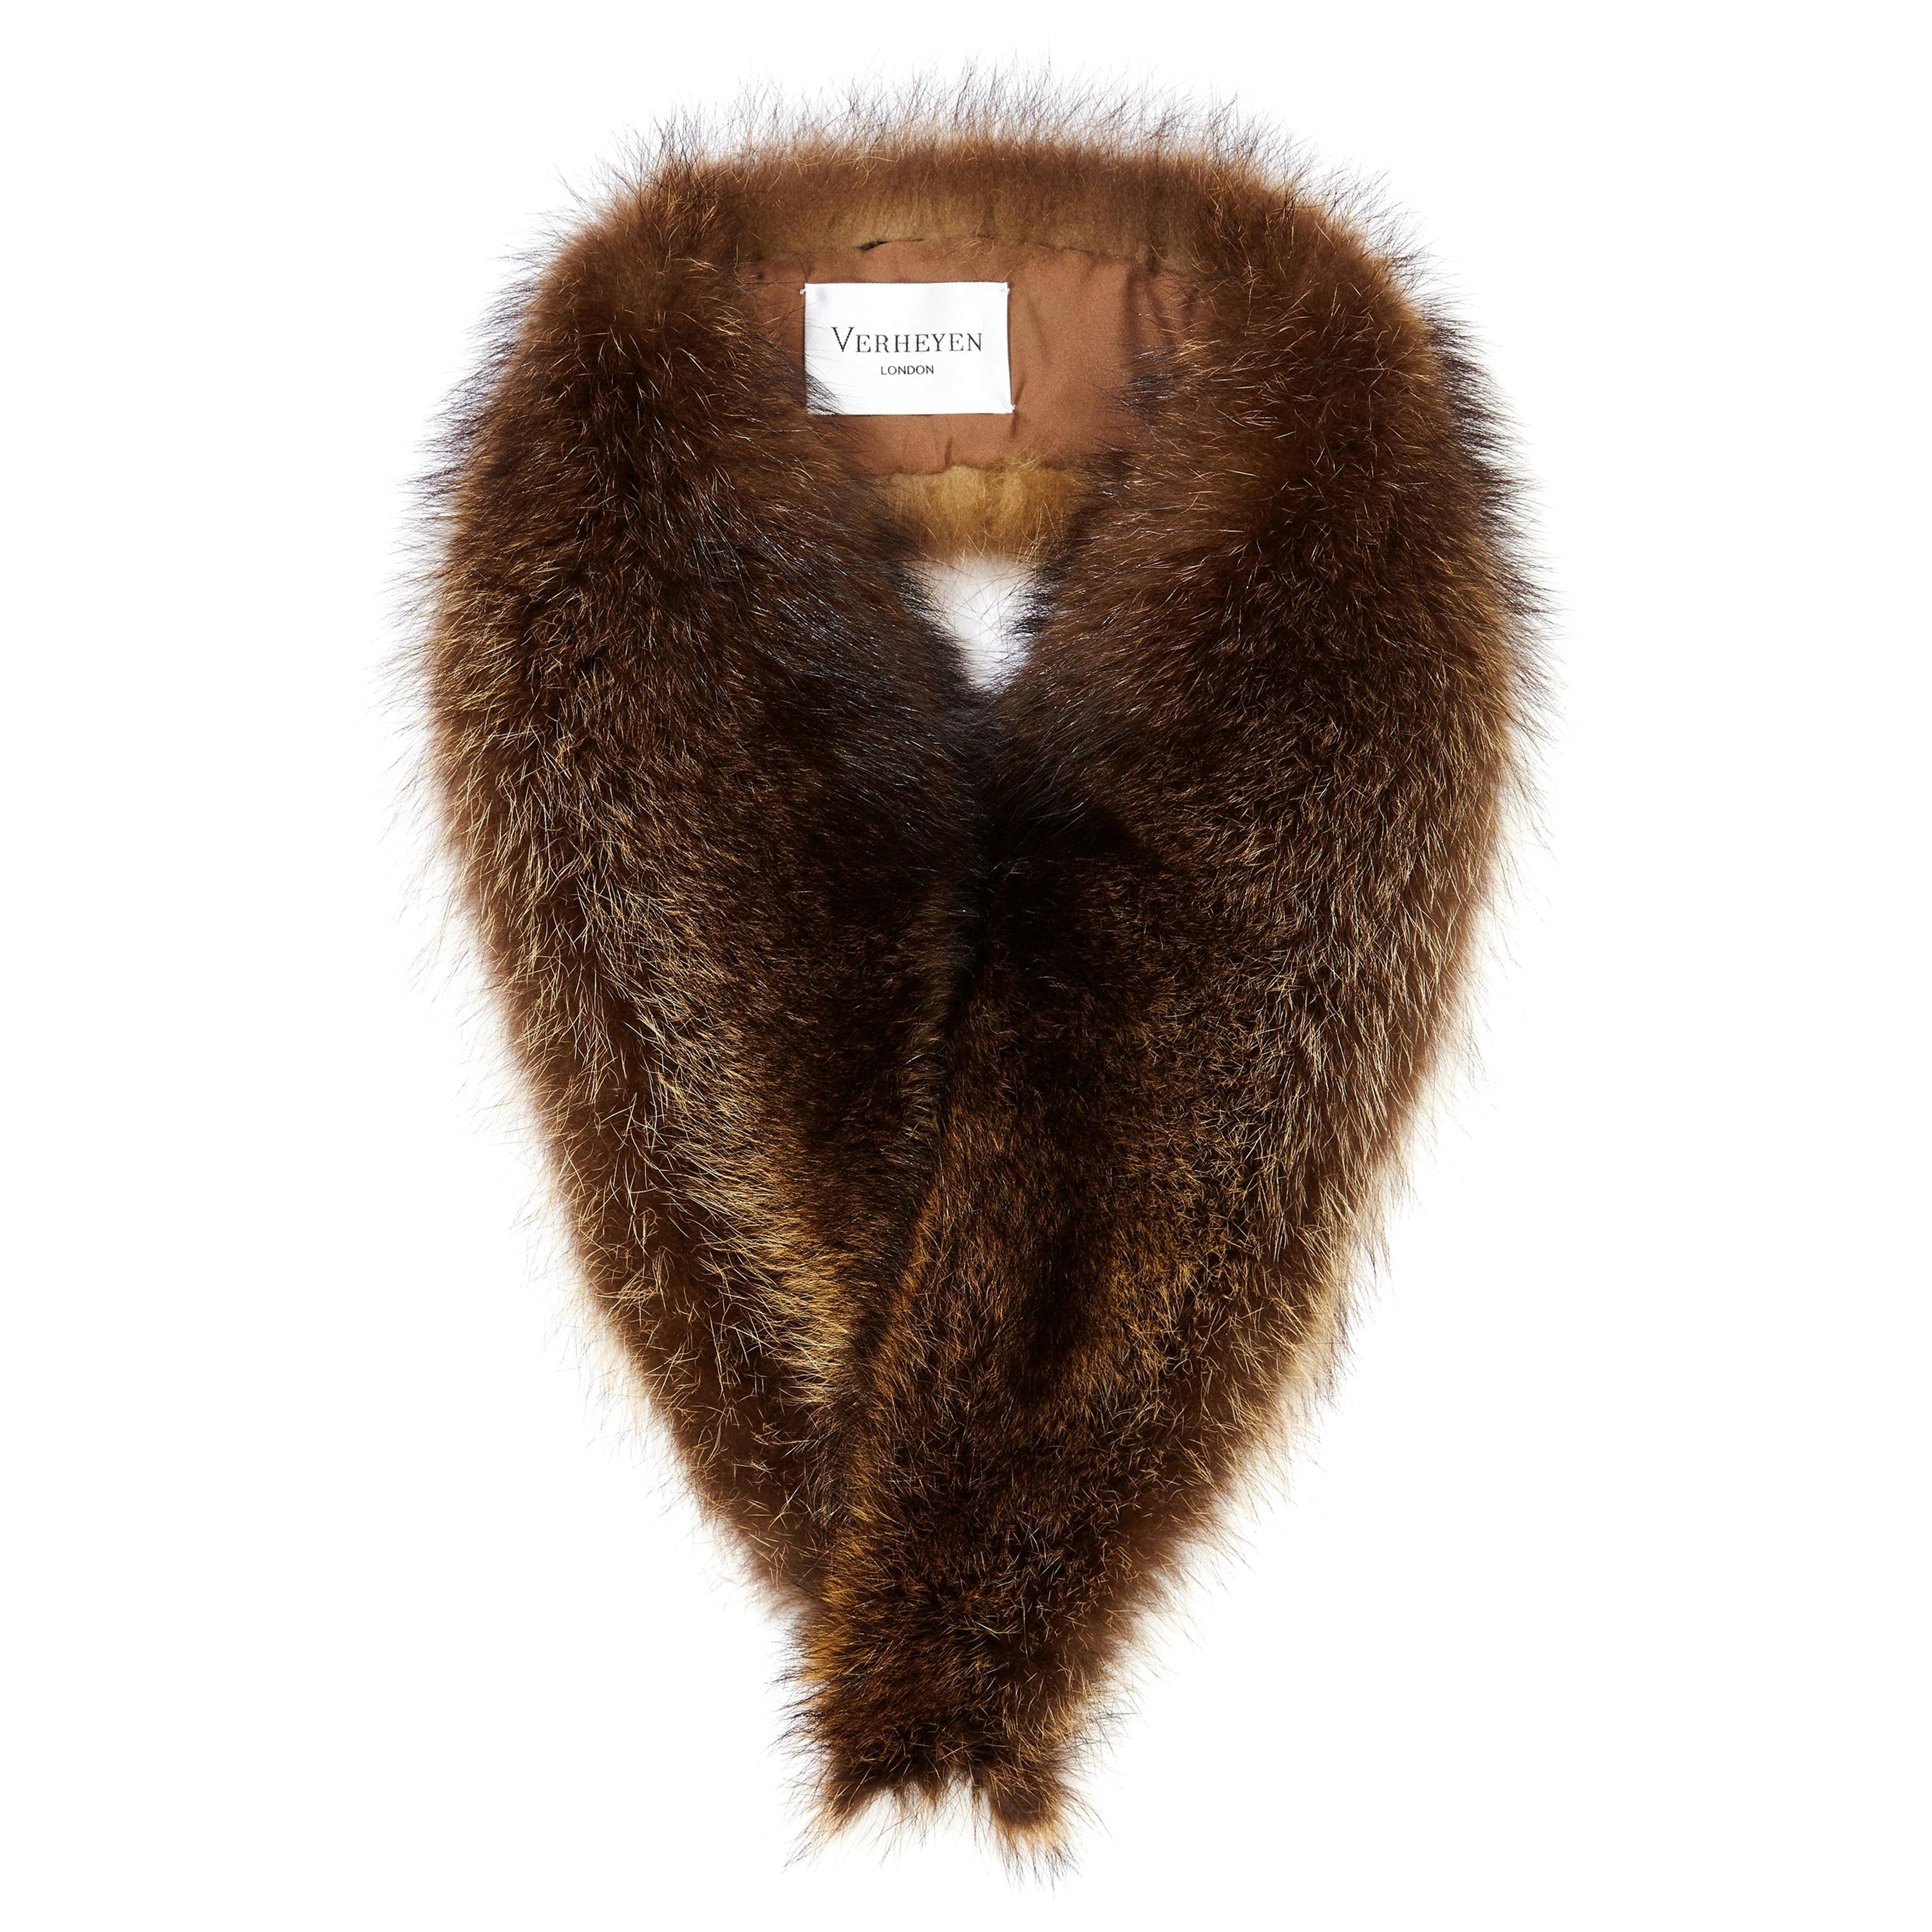 Verheyen London Mens Detachable Fur Collar in Raccoon - Brand New